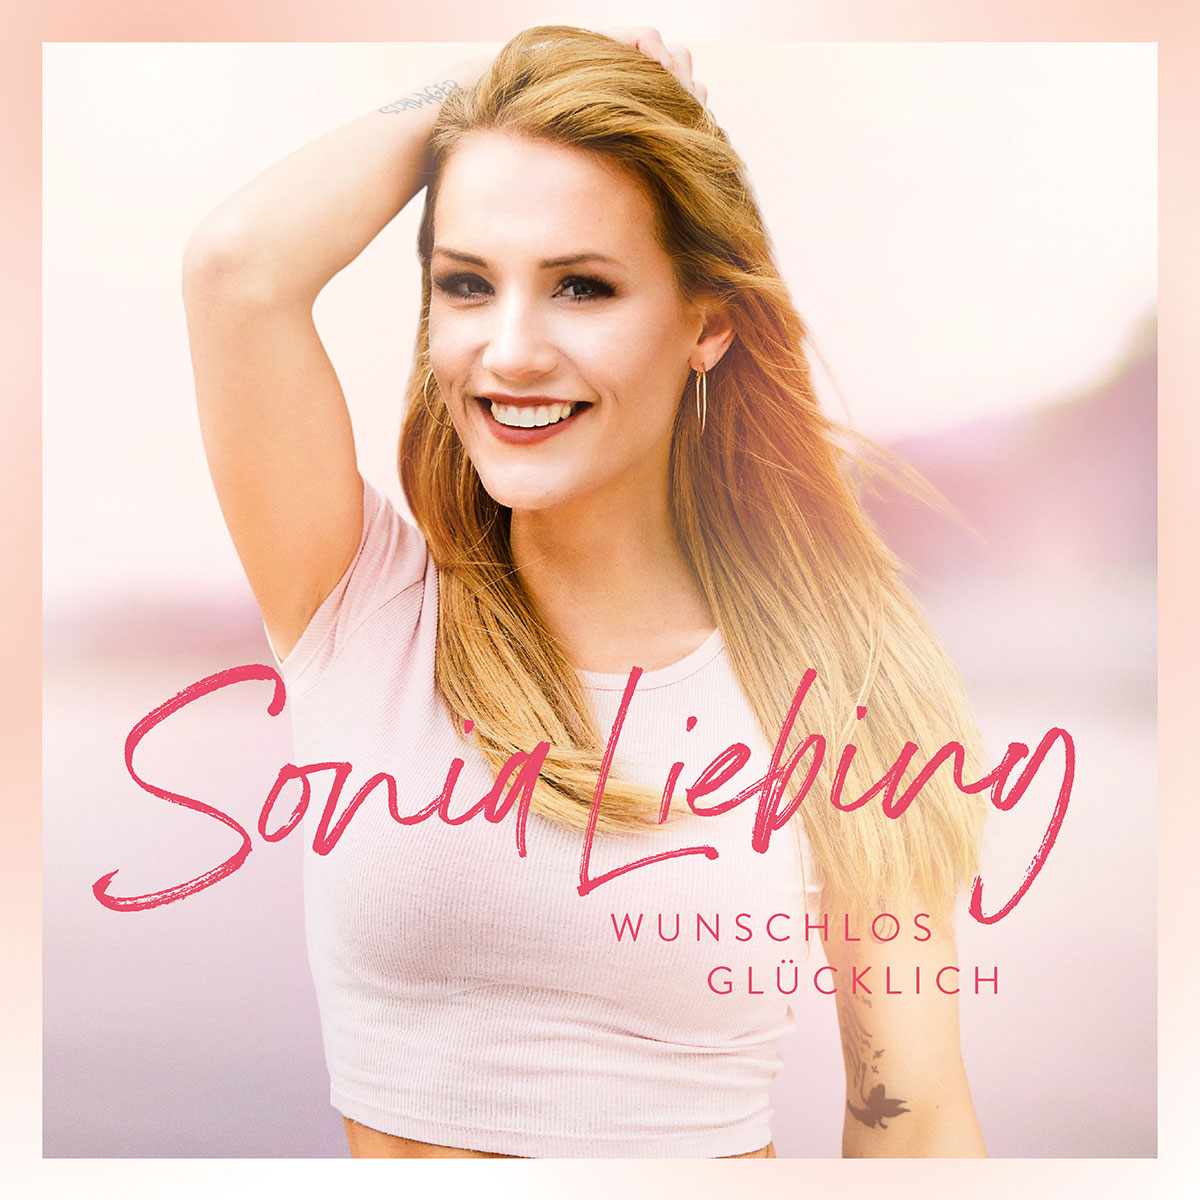 Sonia Liebing Wunschlos Glücklich Album Cover